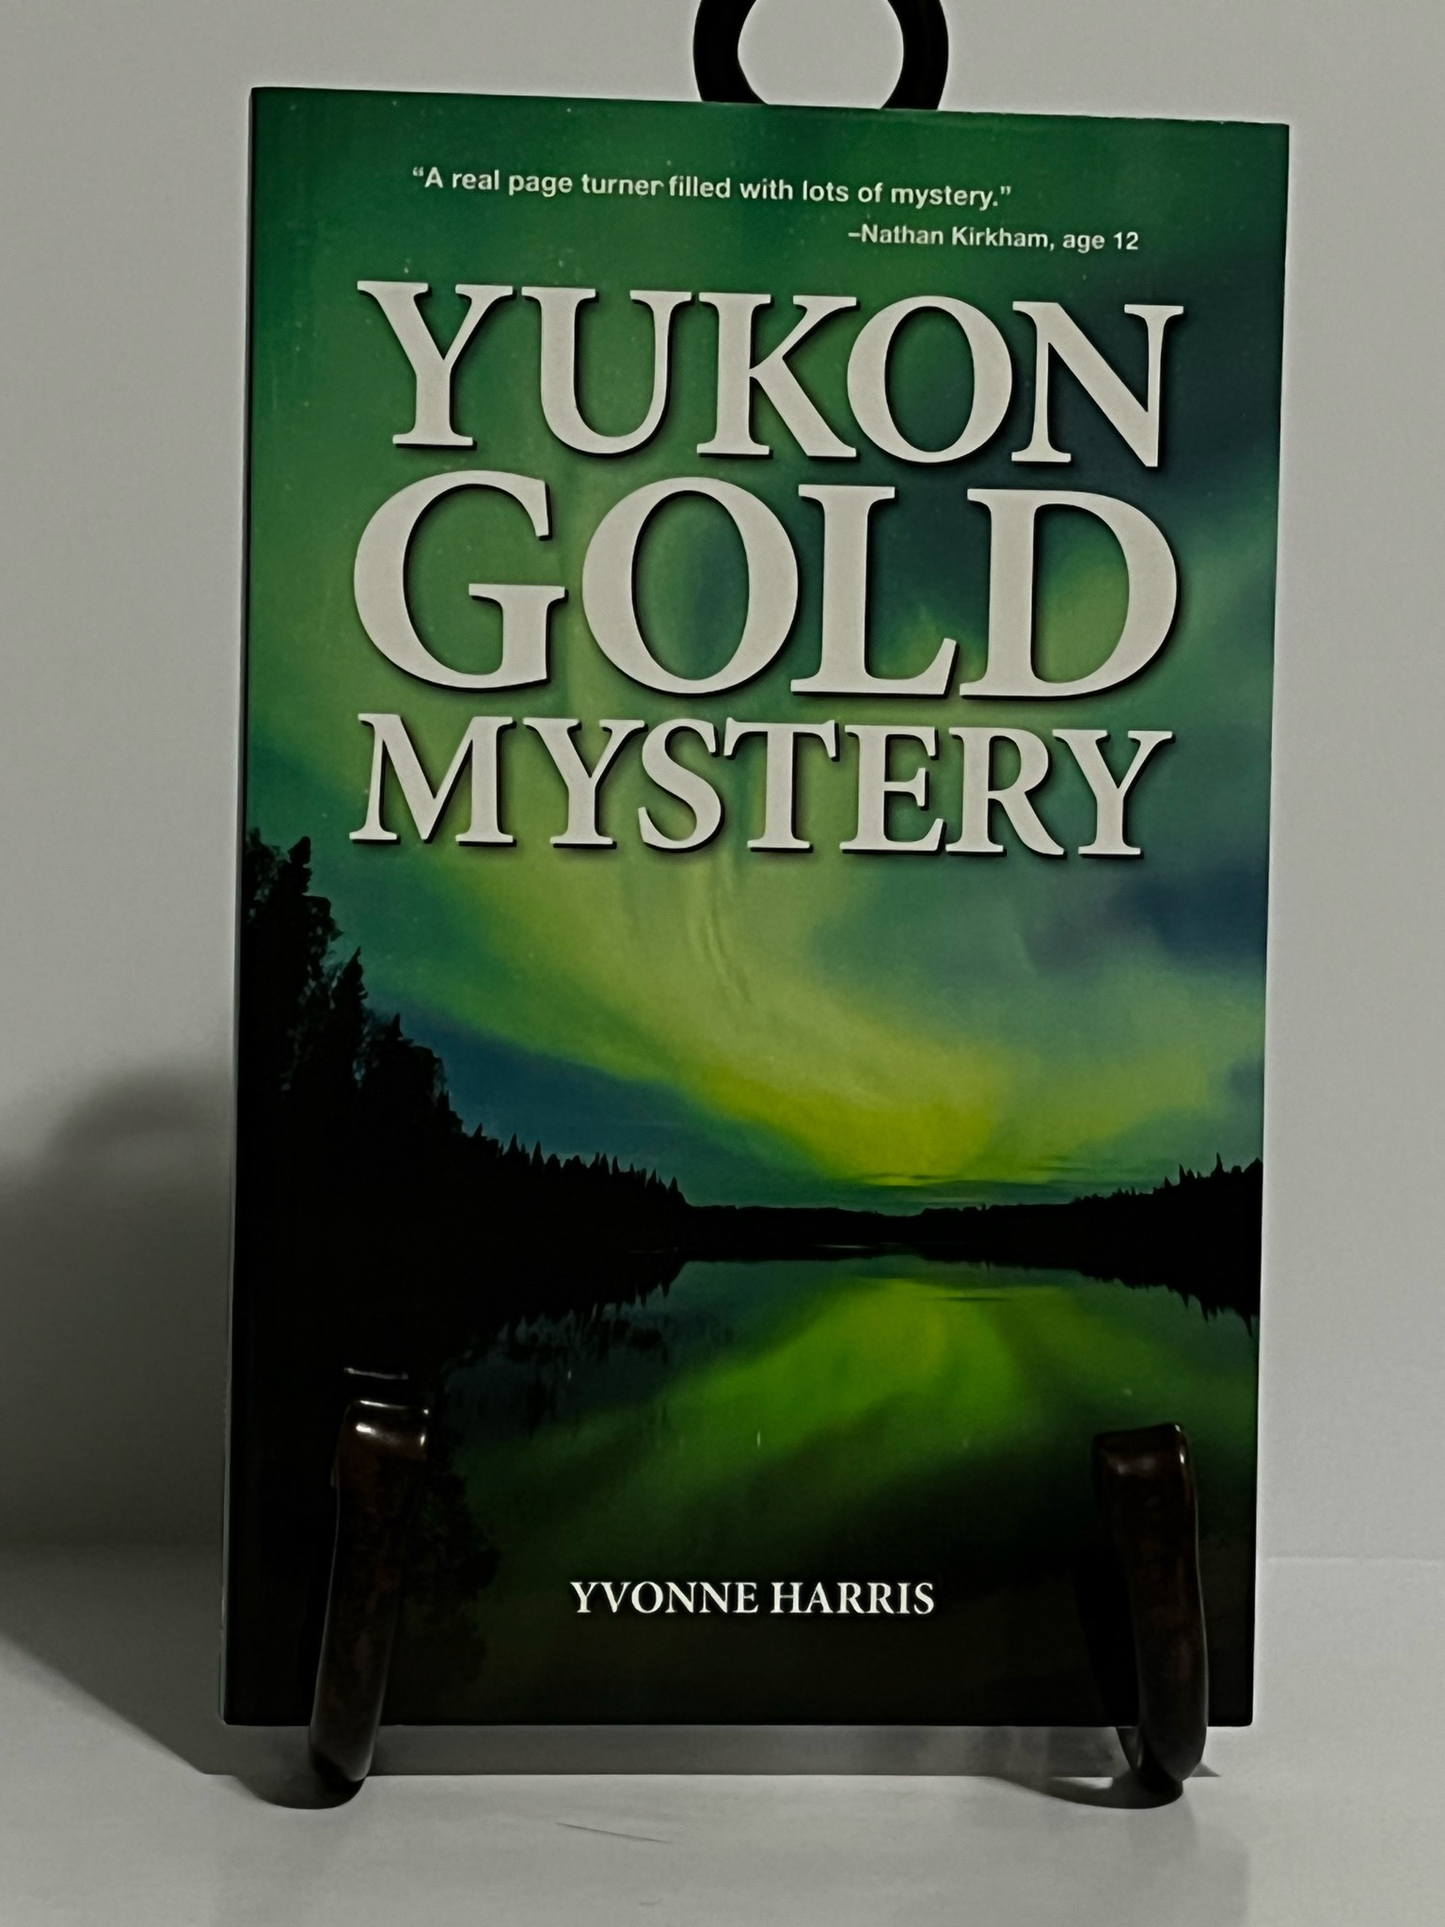 Yukon Gold Mystery